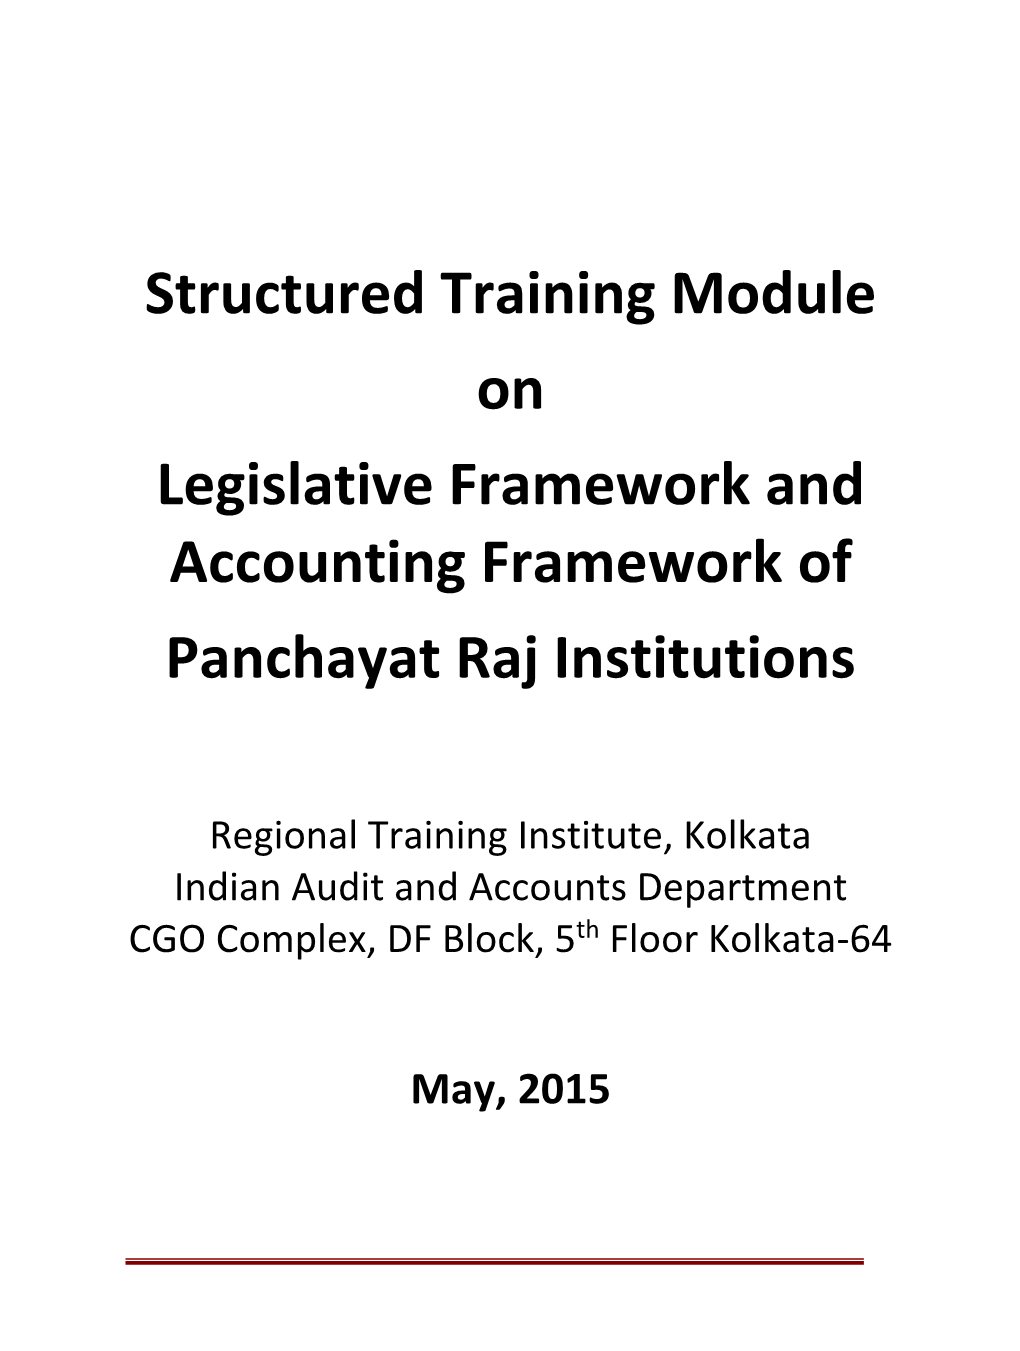 Structured Training Module on Legislative Framework and Accounting Framework of Panchayat Raj Institutions